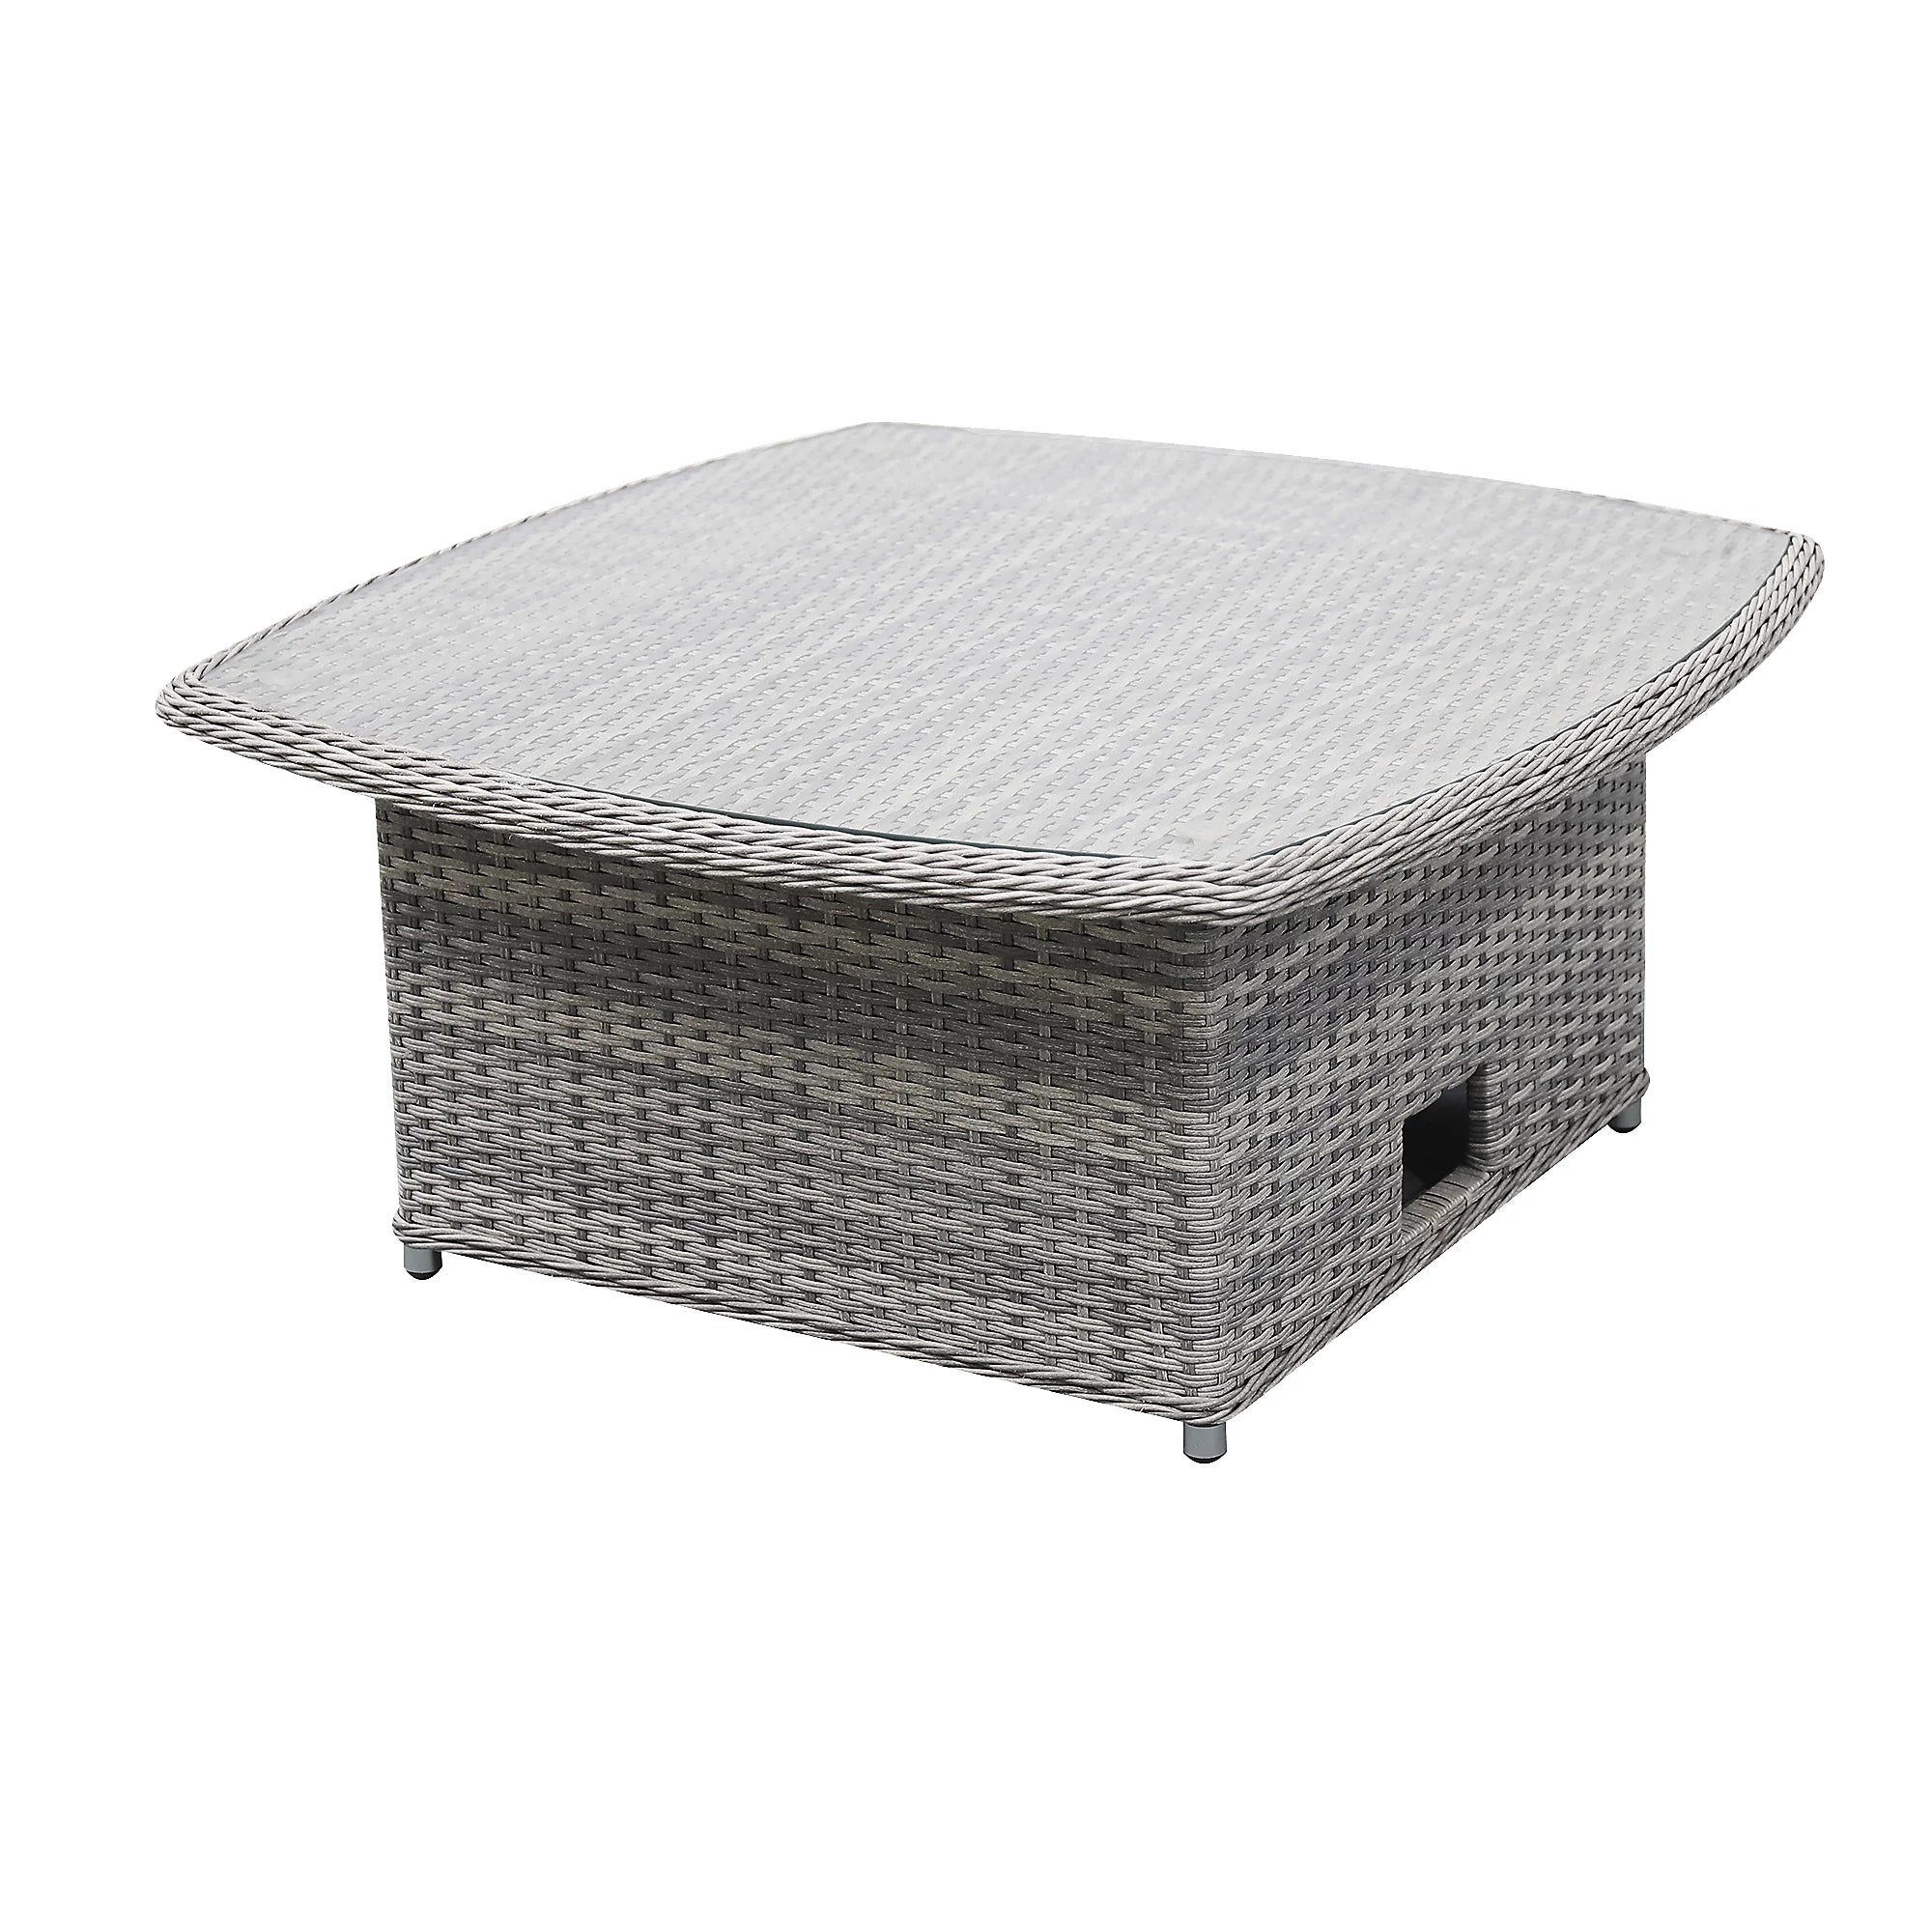 GoodHome Hamilton Steeple grey Rattan effect 8 Seater Garden furniture set - No Back Cushions - No table glass